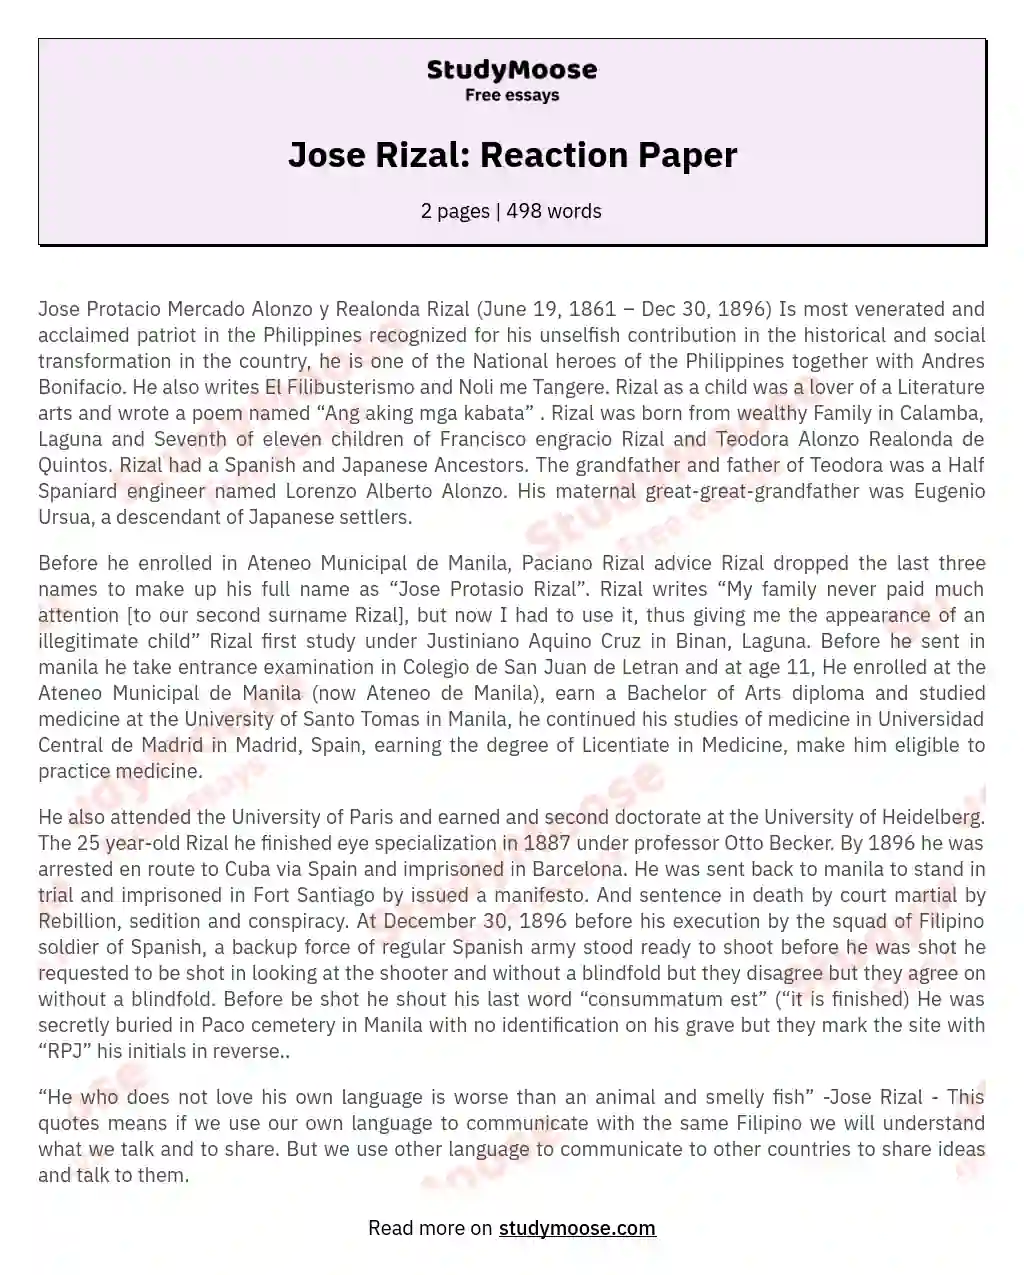 thesis statement about jose rizal